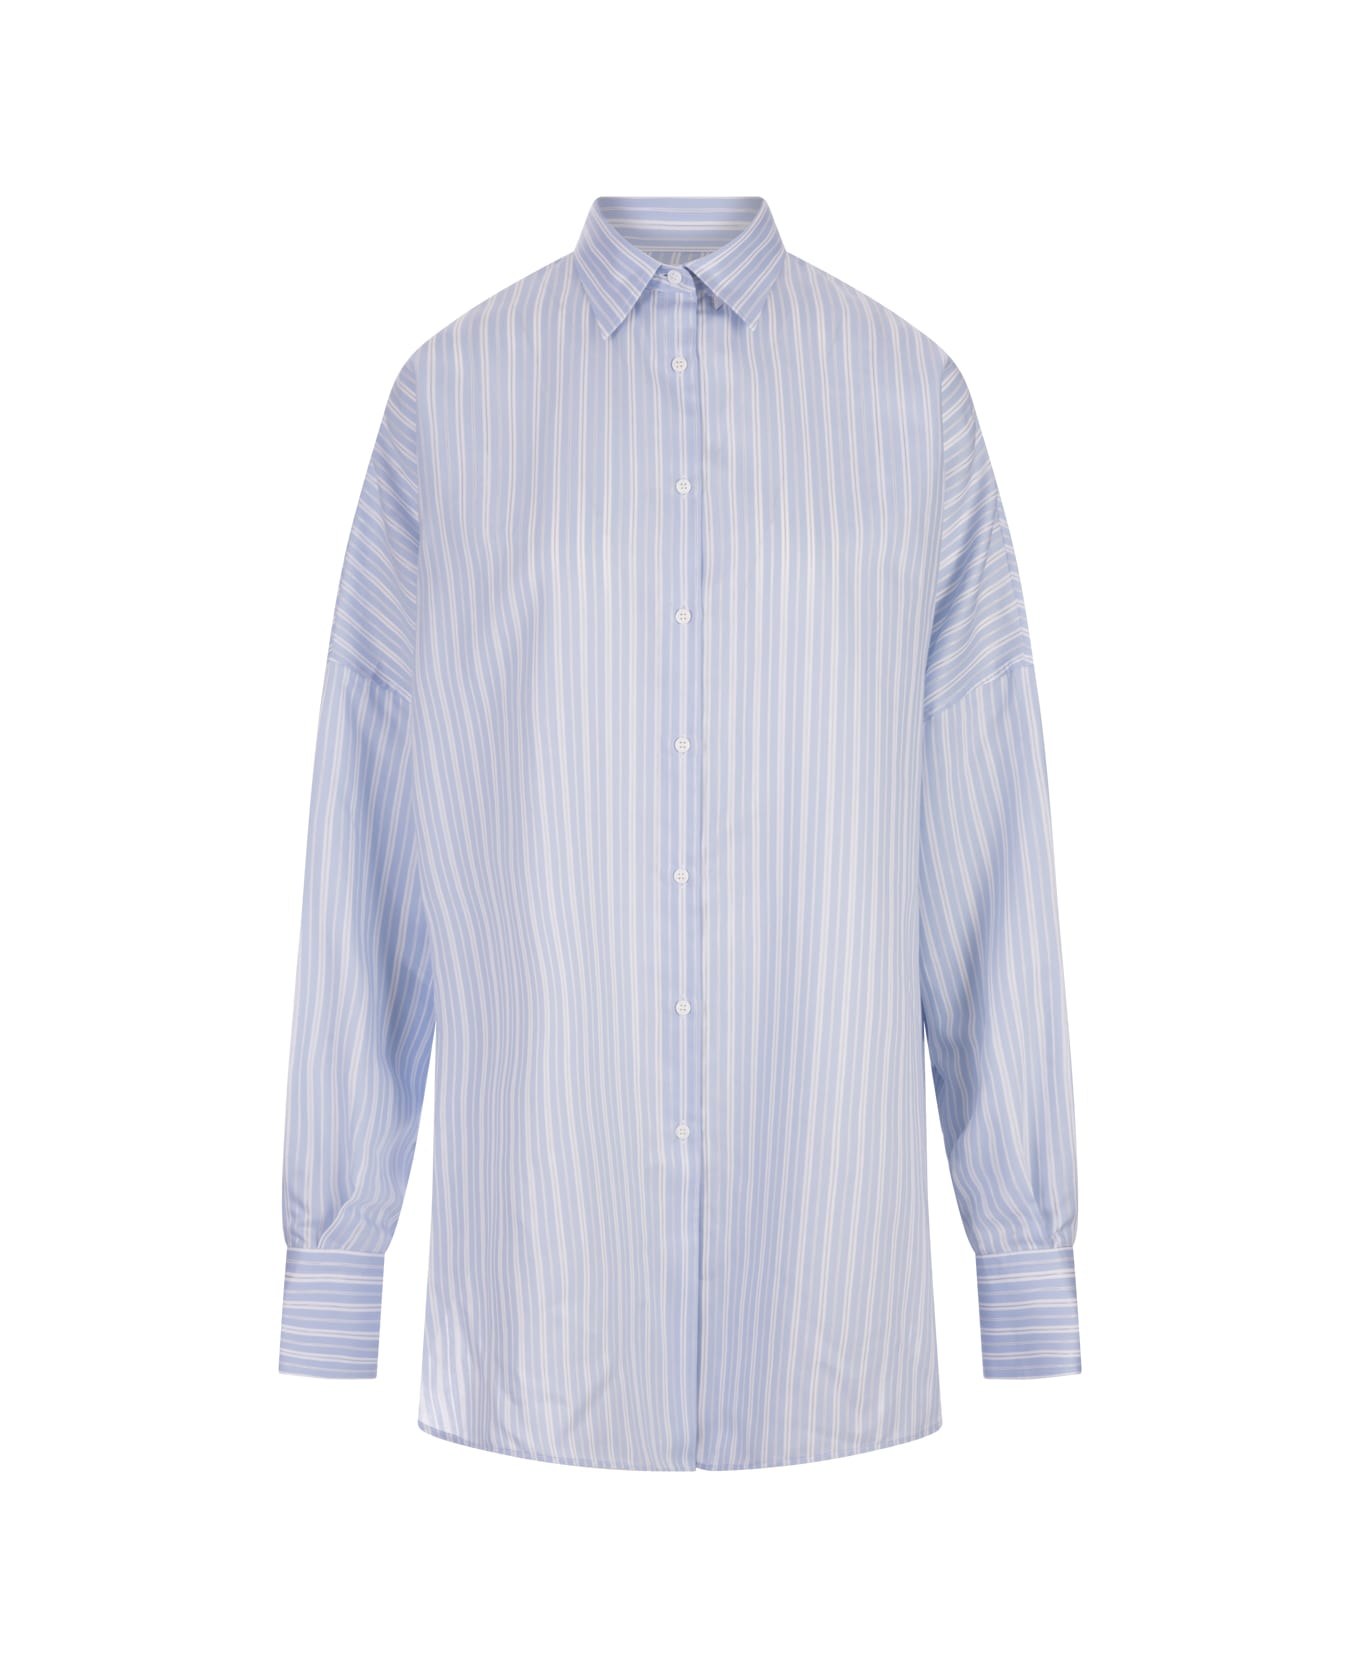 Ermanno Scervino Blue, White And Silver Striped Over Shirt - Blue